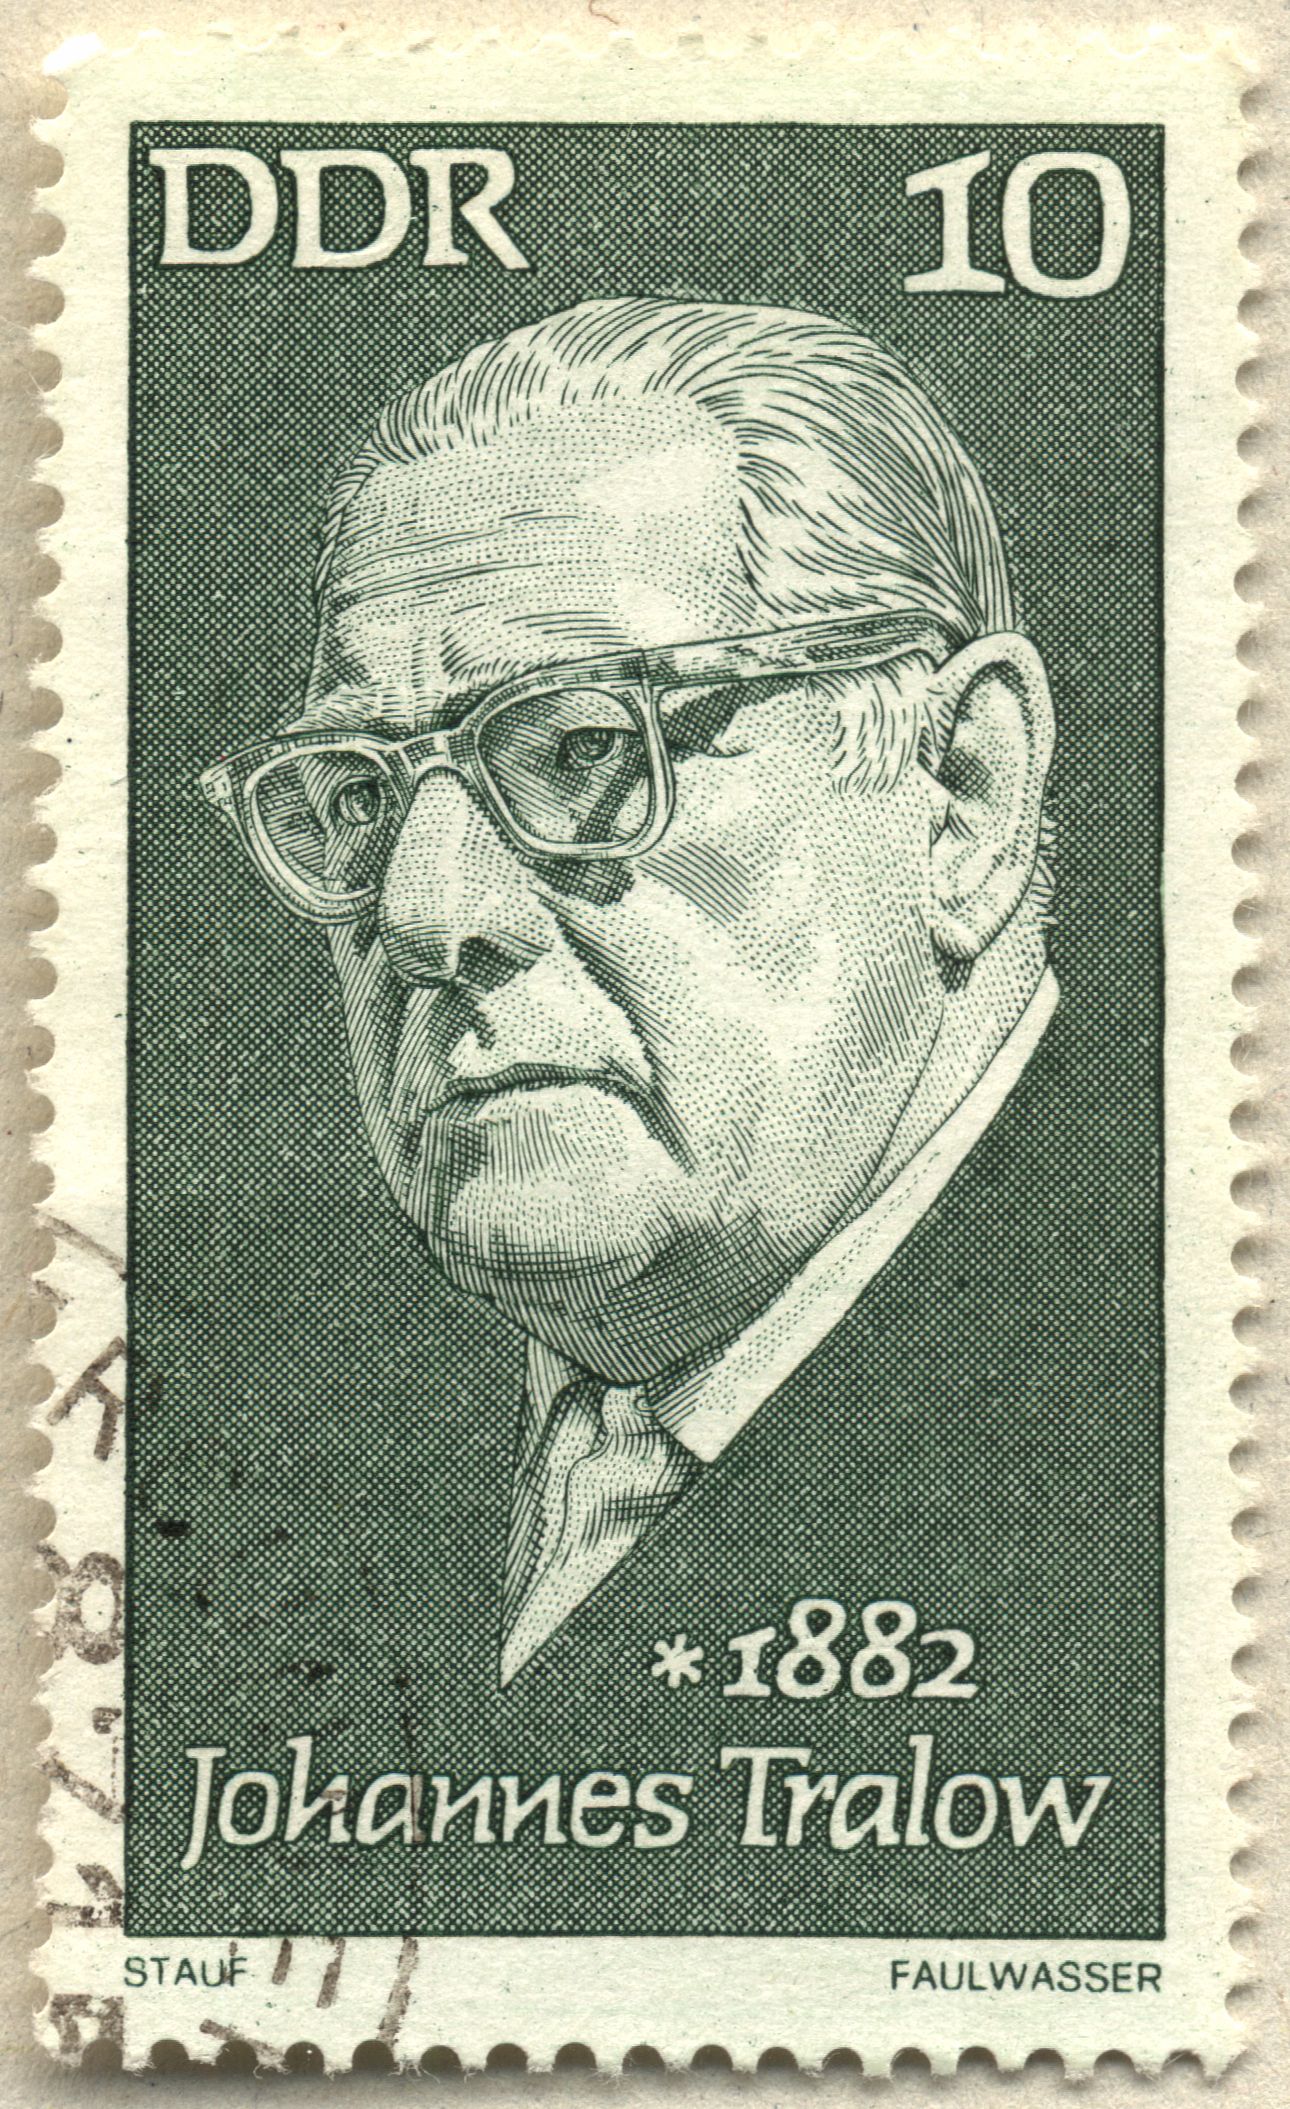 Stamp Johannes Tralow